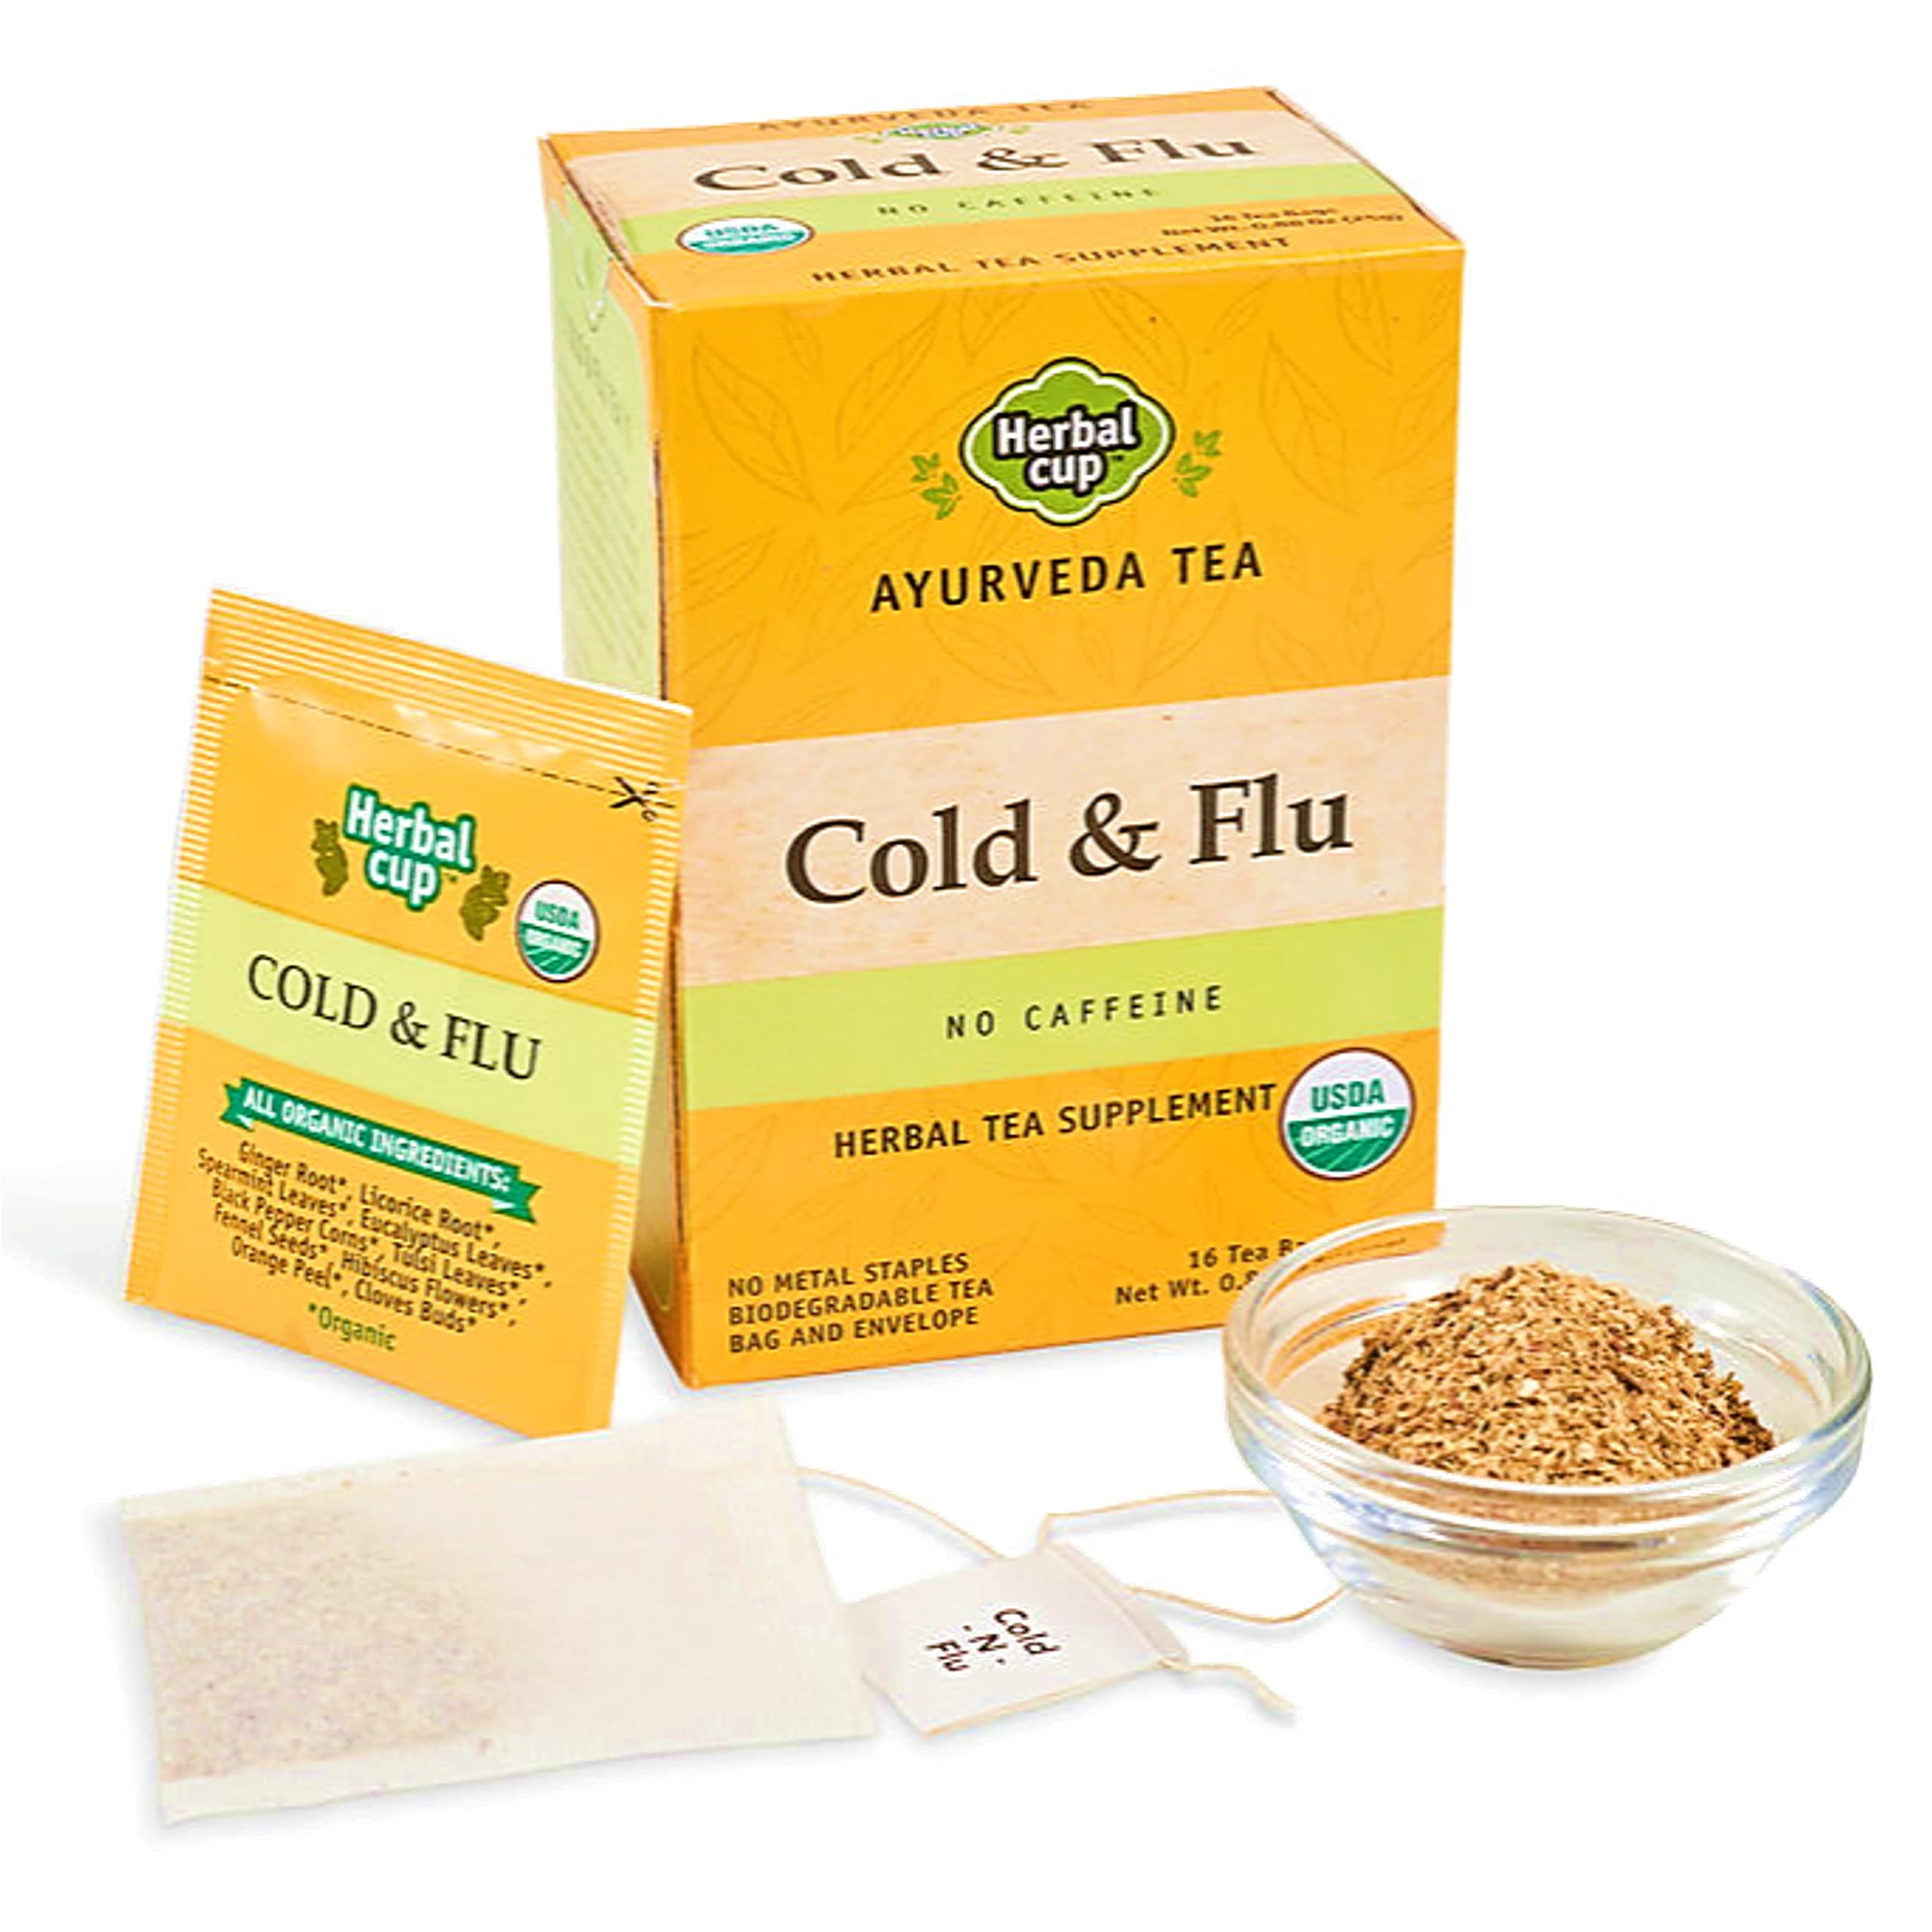 Herbal Cup Ayurveda Cold & Flu Tea, Organic Health & Wellness, No Caffeine Herbal Teas (16 Count, Pack of 1)